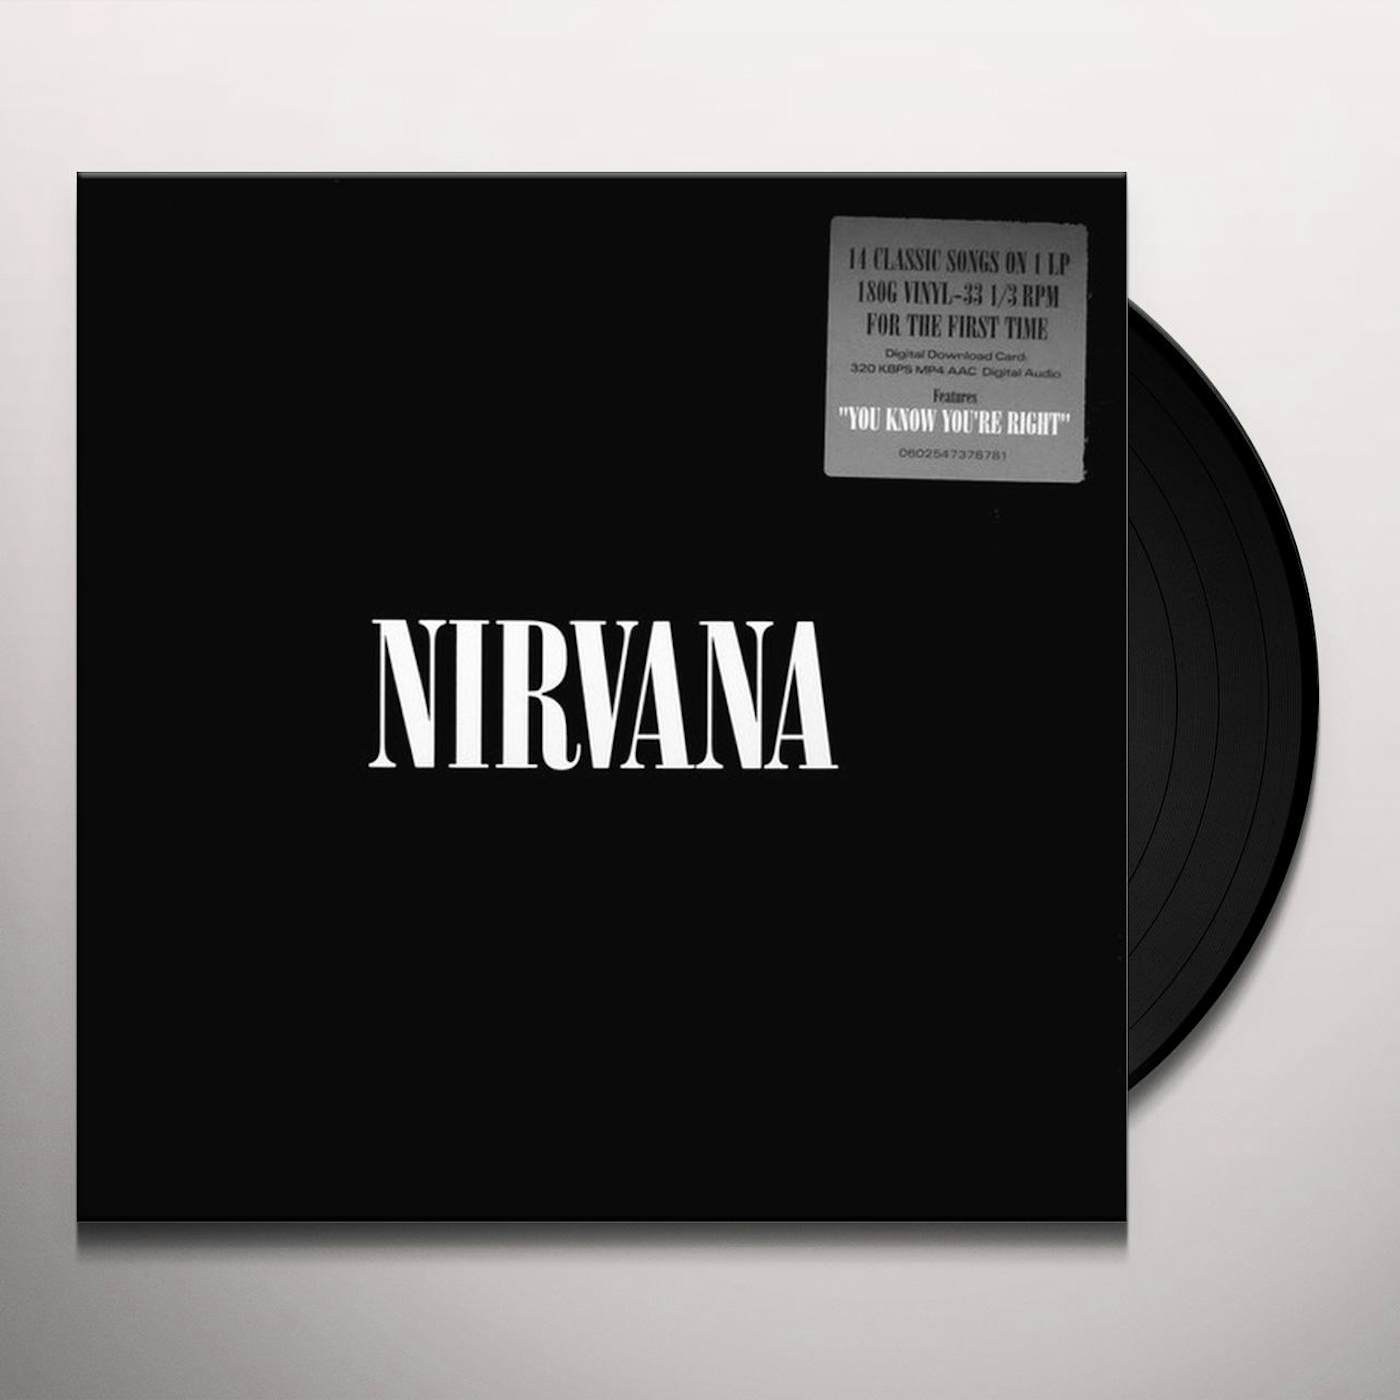 Nirvana Vinyl Record